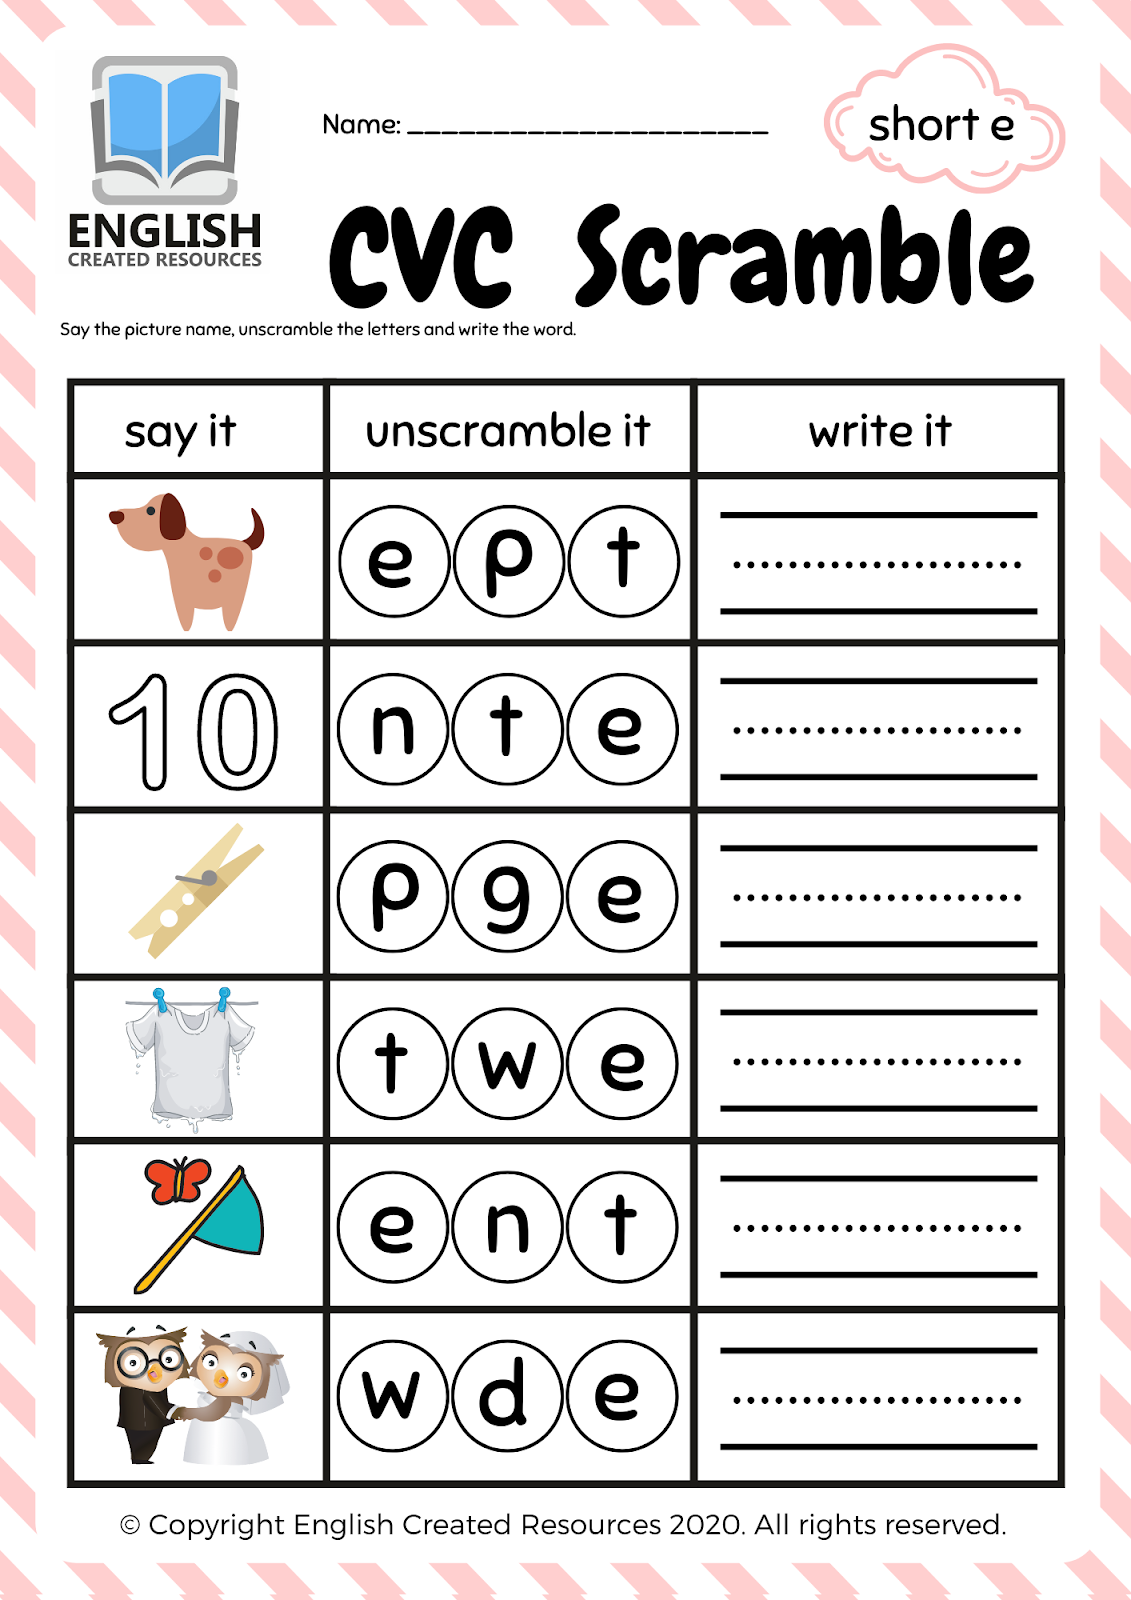 cvc-scramble-worksheets-english-created-resources